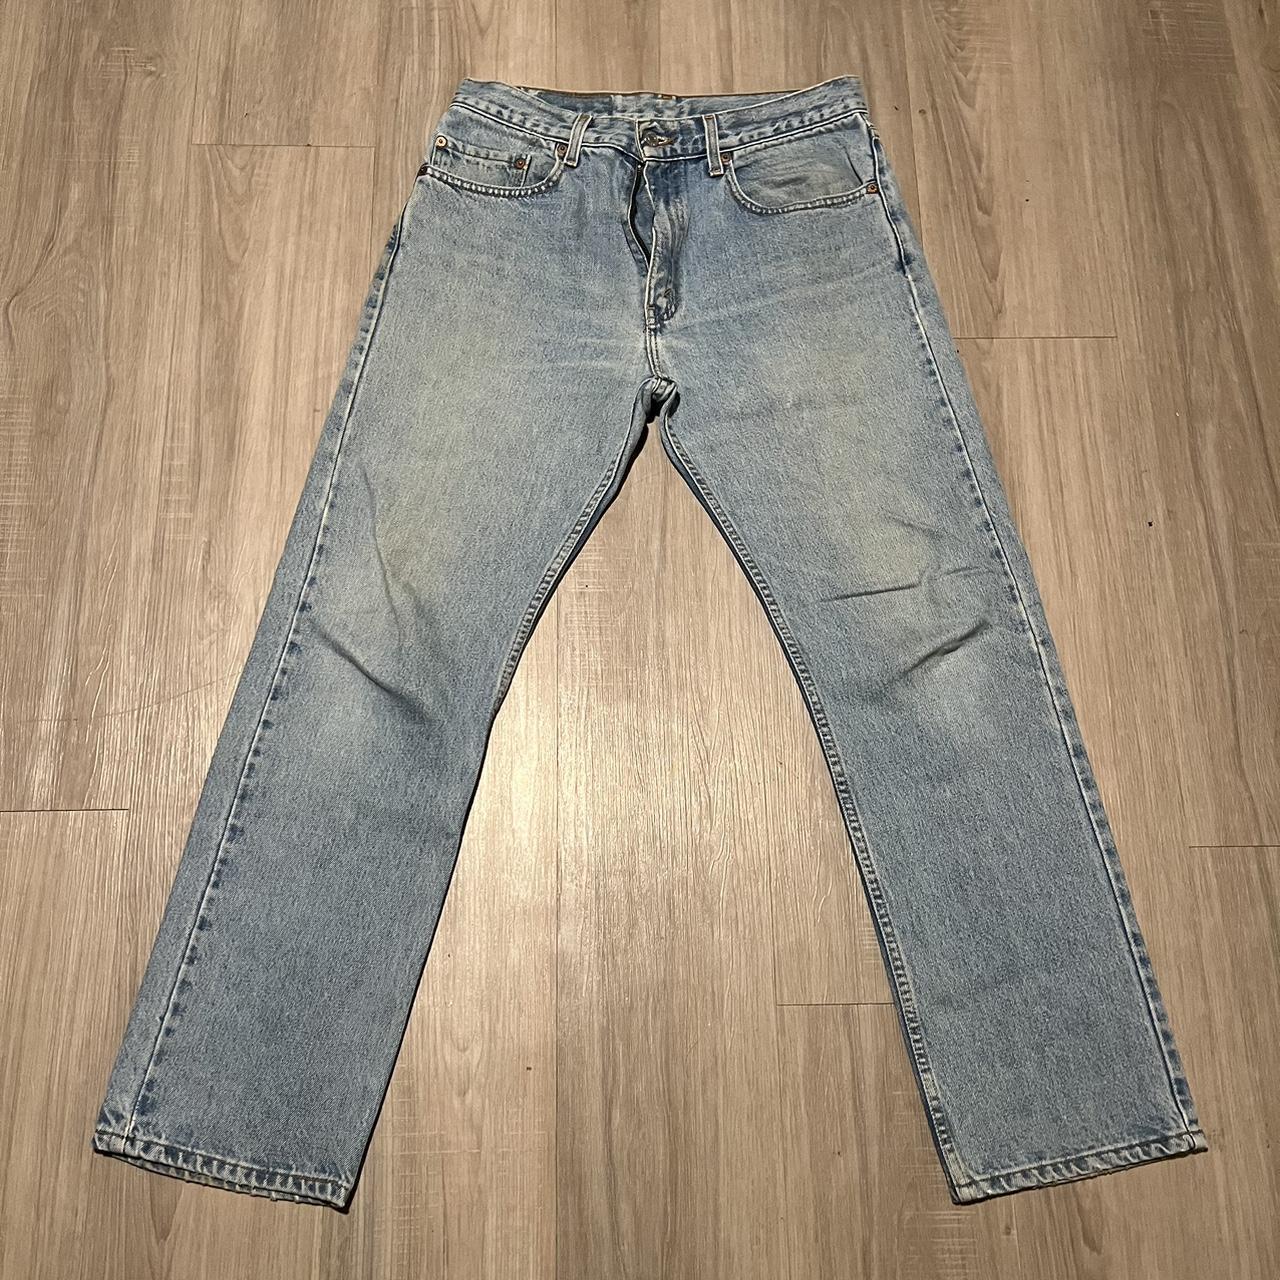 Vintage 1999 Levi’s 505 pants 32x30 Regular... - Depop